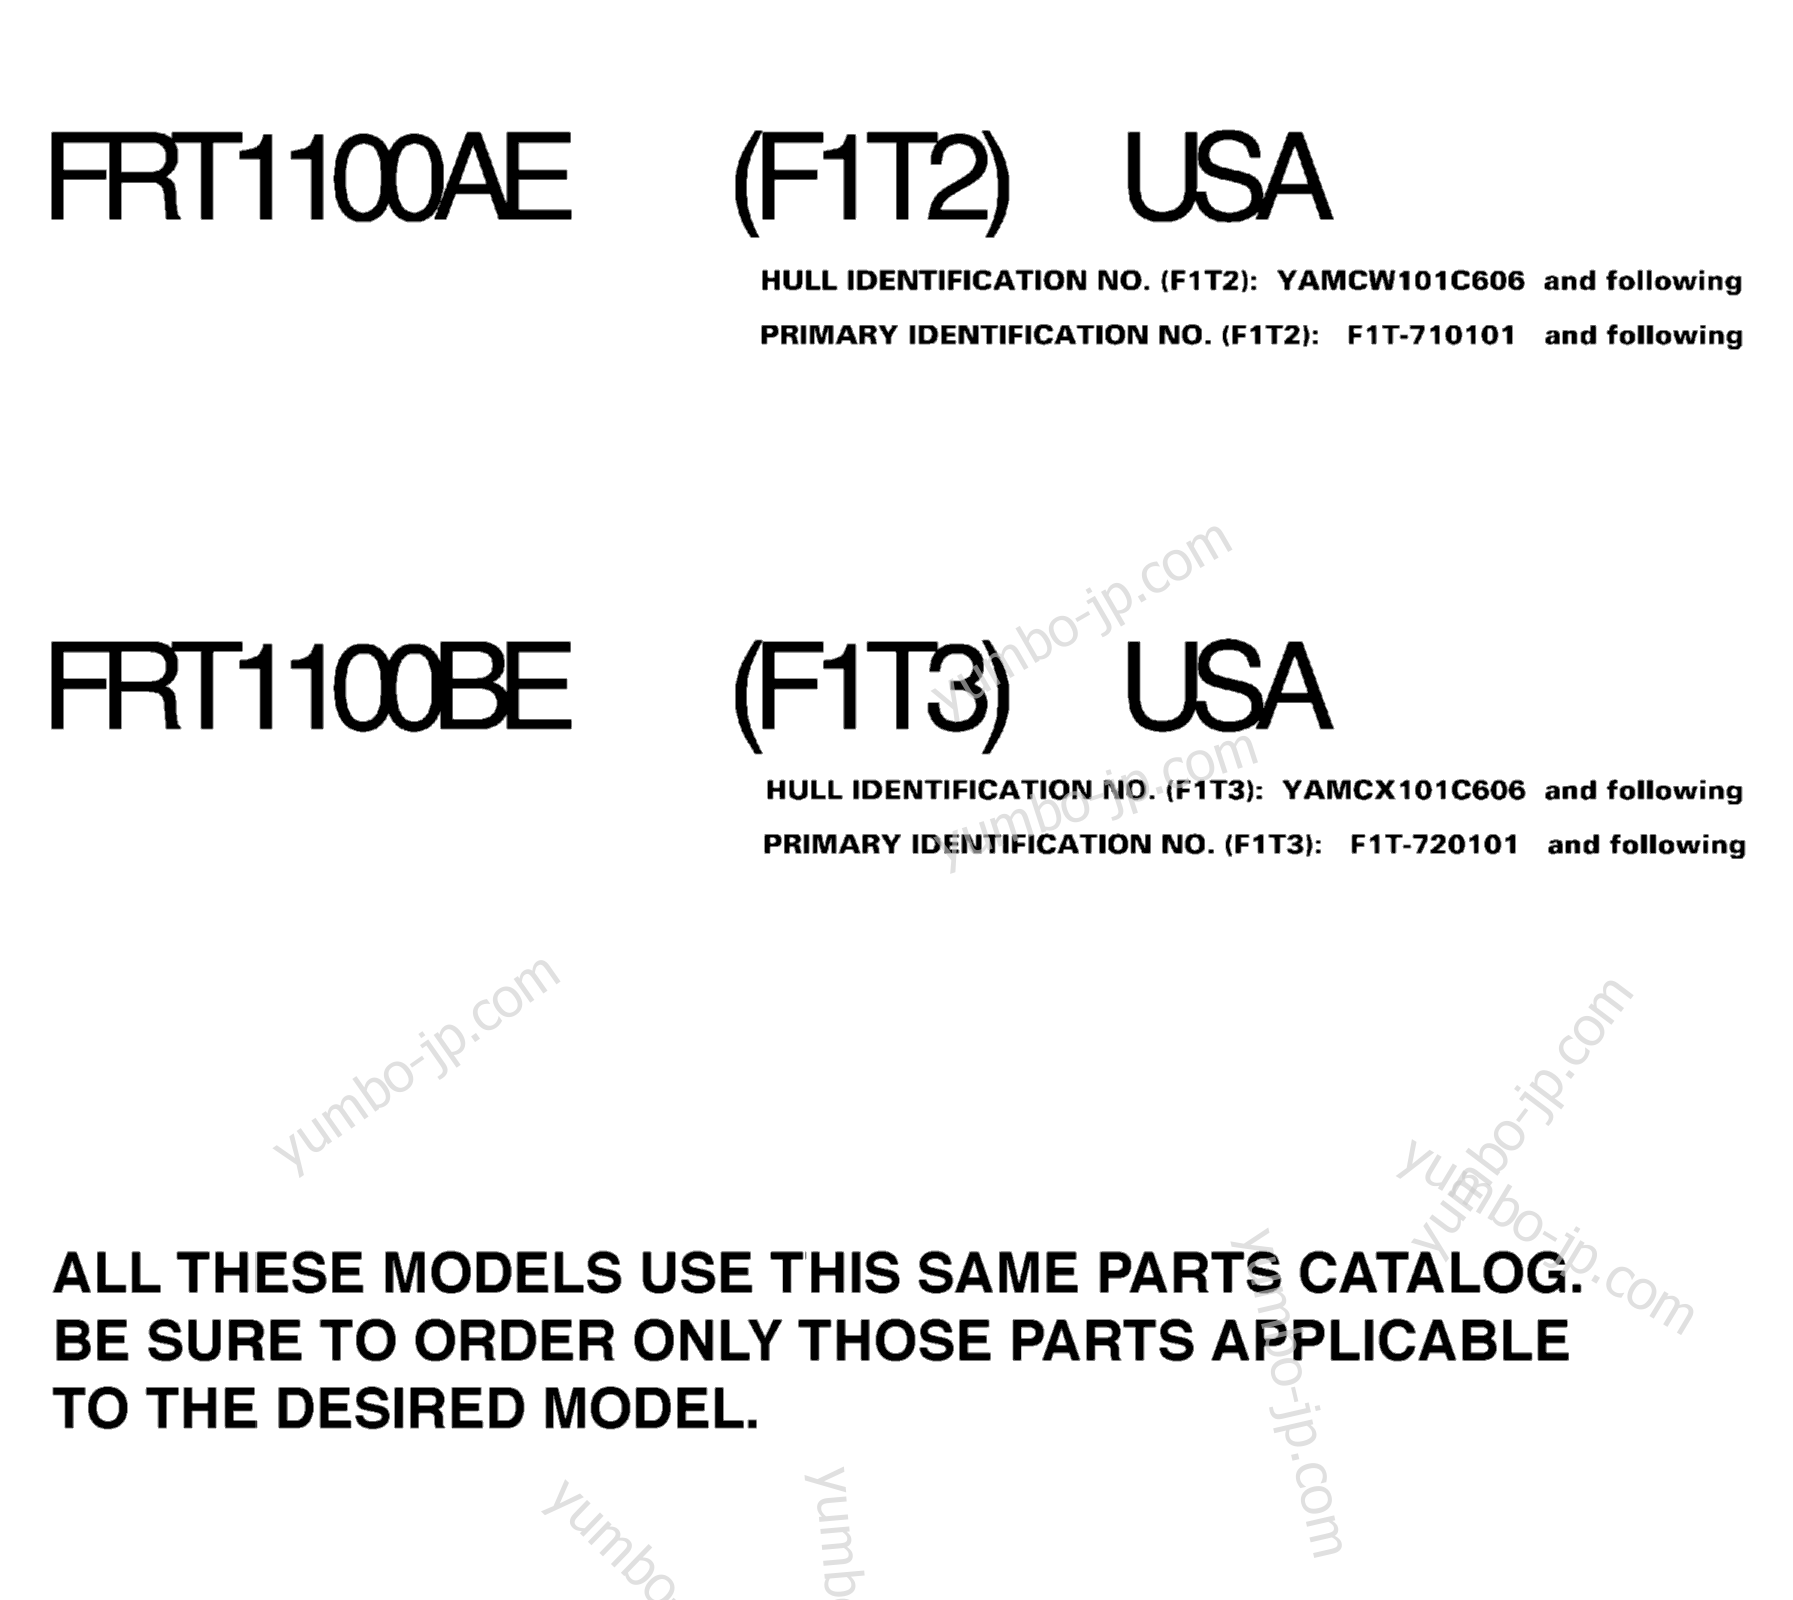 Models In This Catalog для катеров YAMAHA SX210 (Blue) (FRT1100AE) 2006 г.